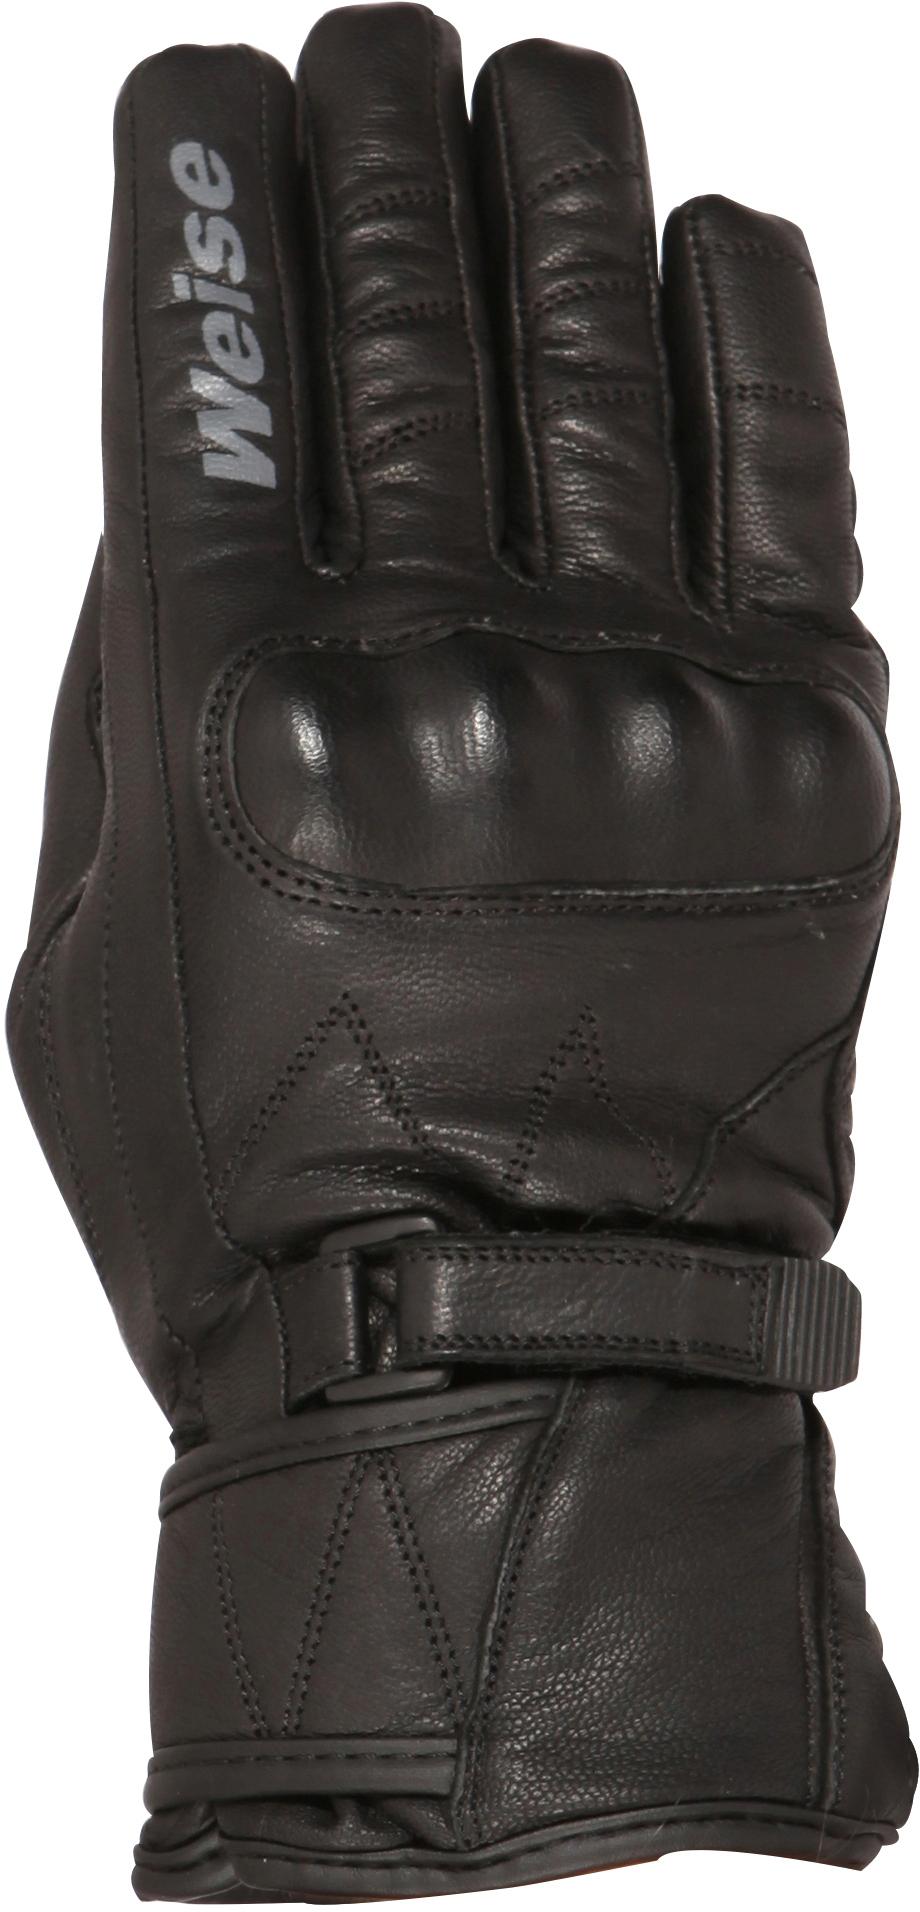 Weise Ripley Ladies Gloves Black Xl